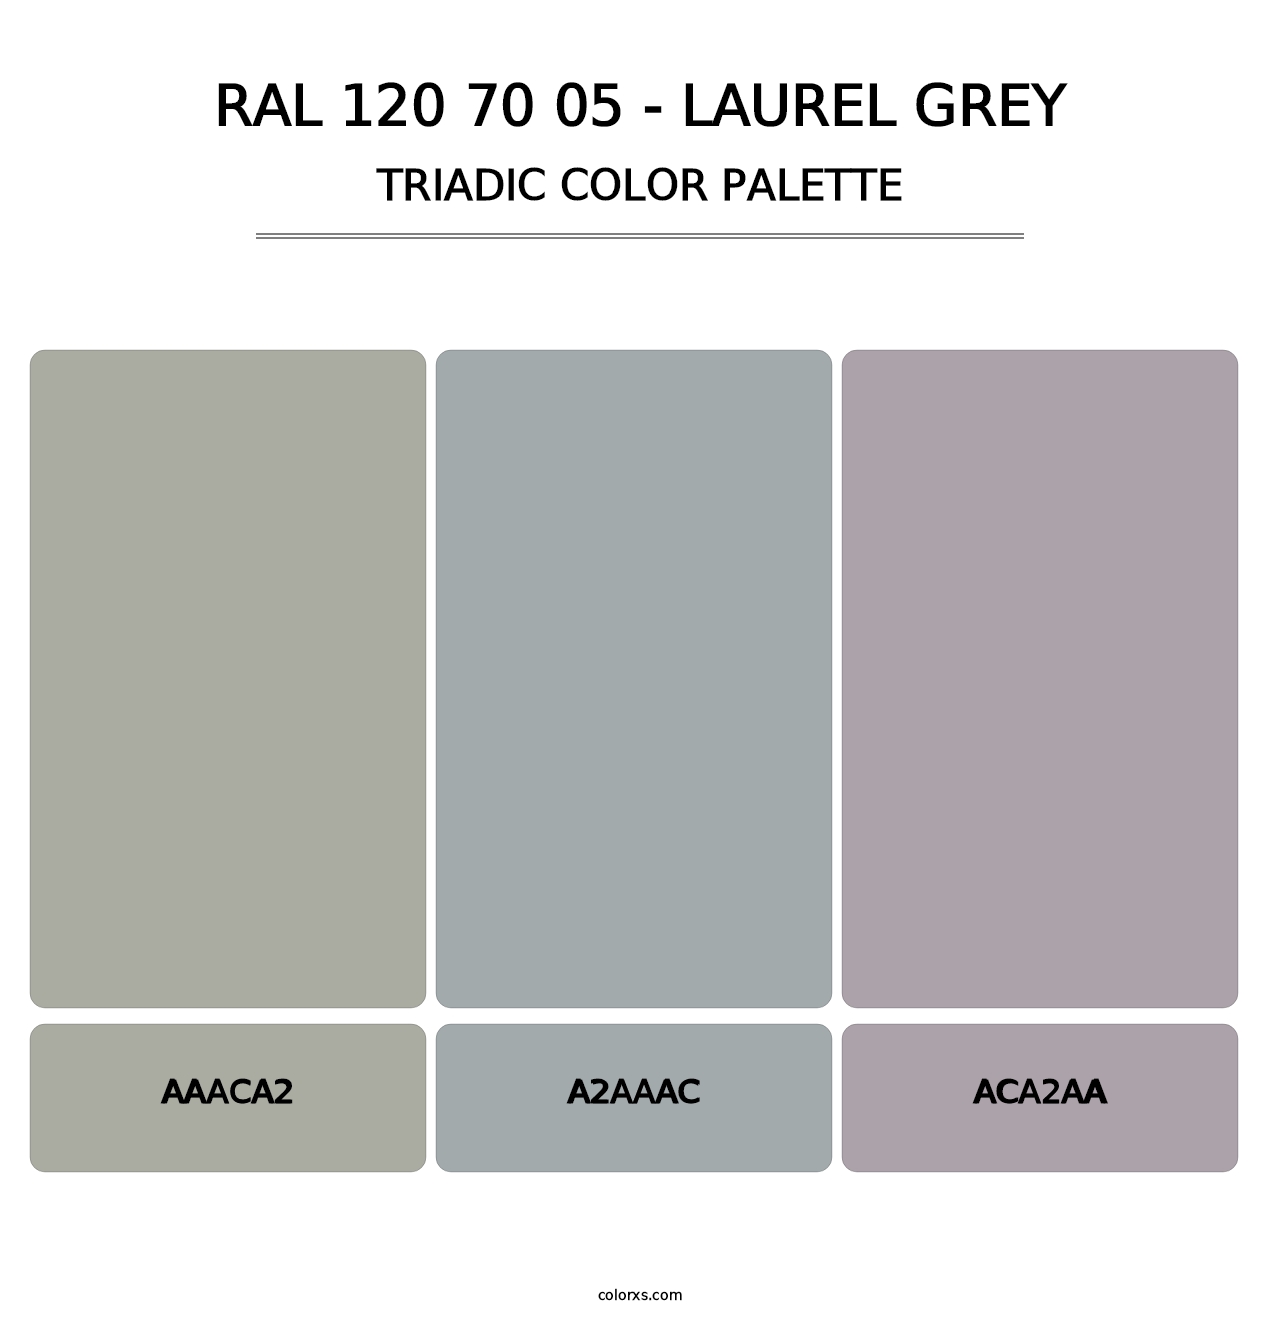 RAL 120 70 05 - Laurel Grey - Triadic Color Palette